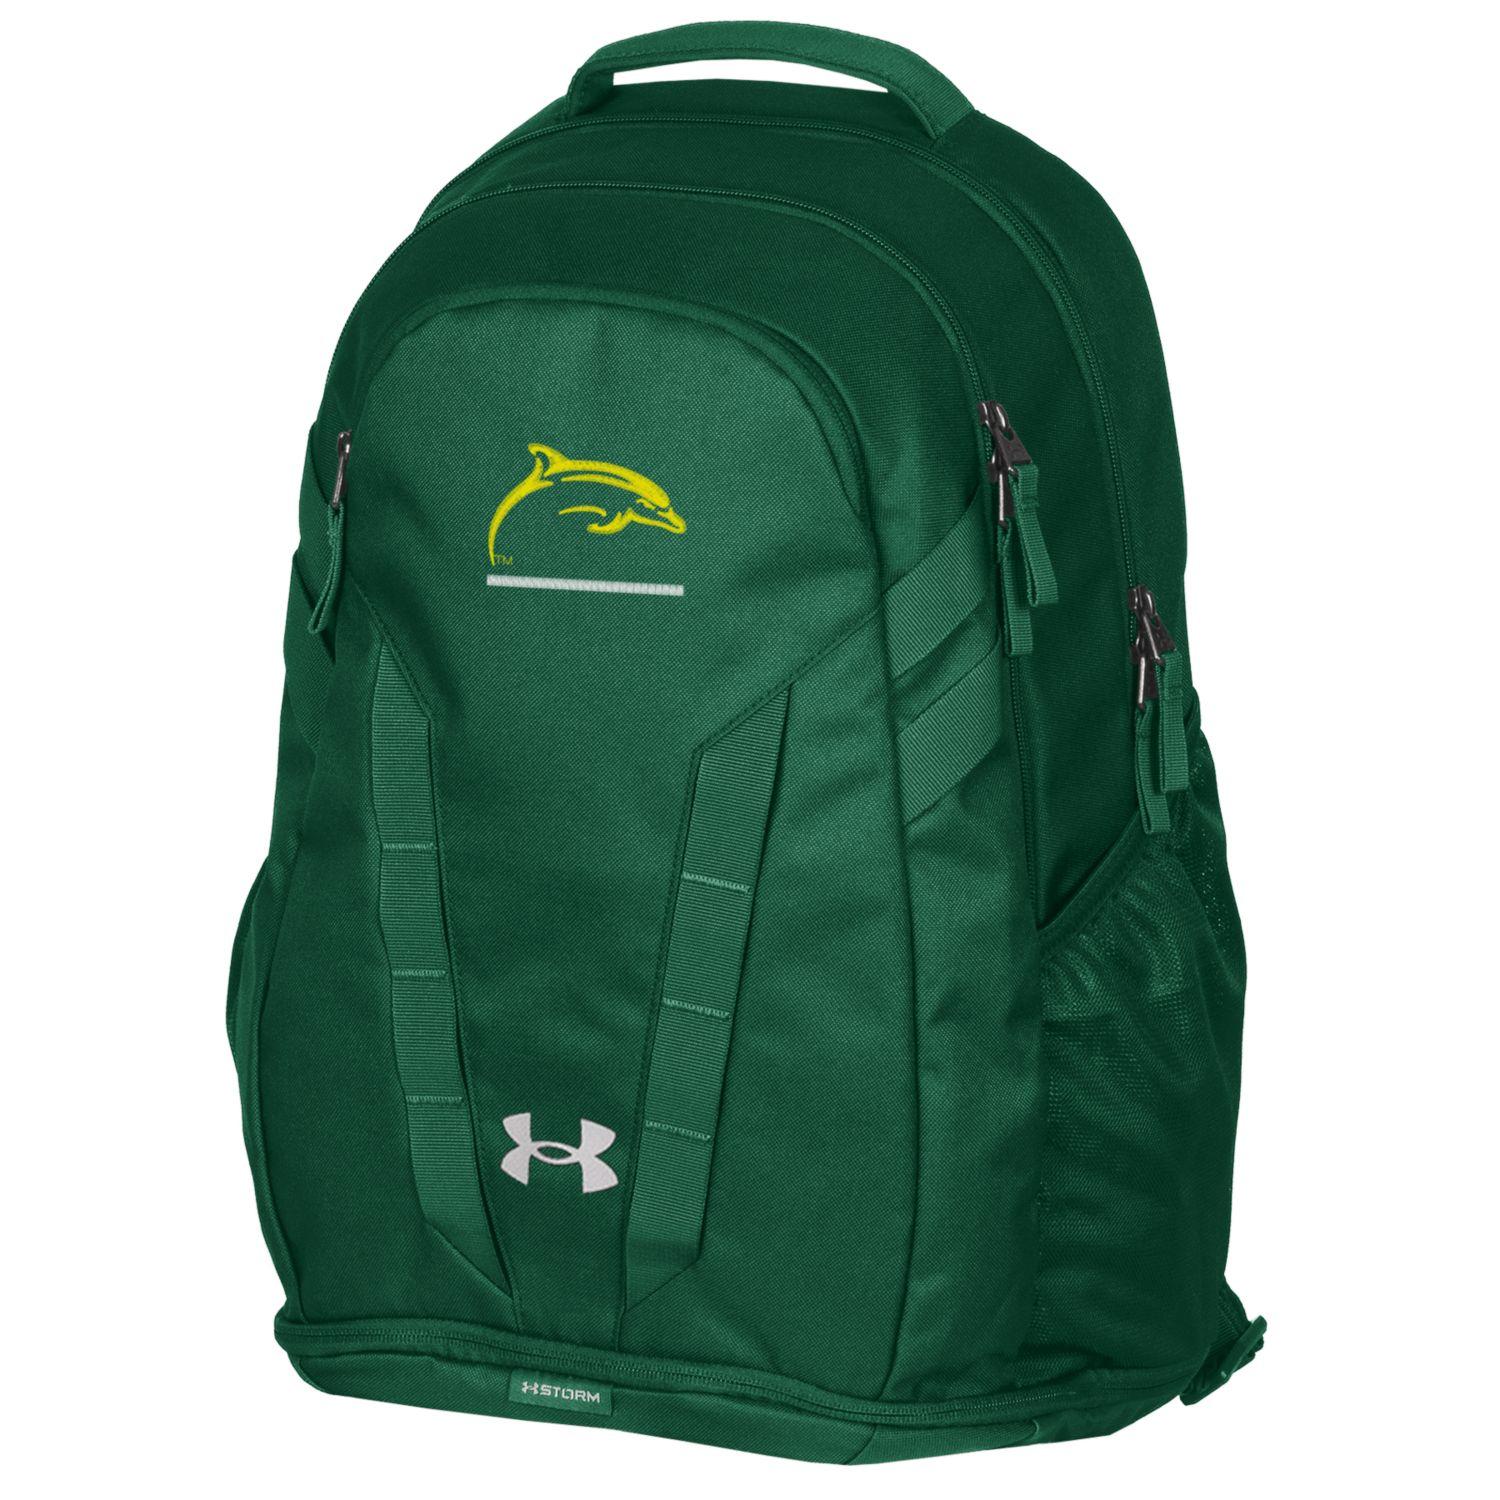 Le Moyne College Hustle 5.0 Backpack forgrn